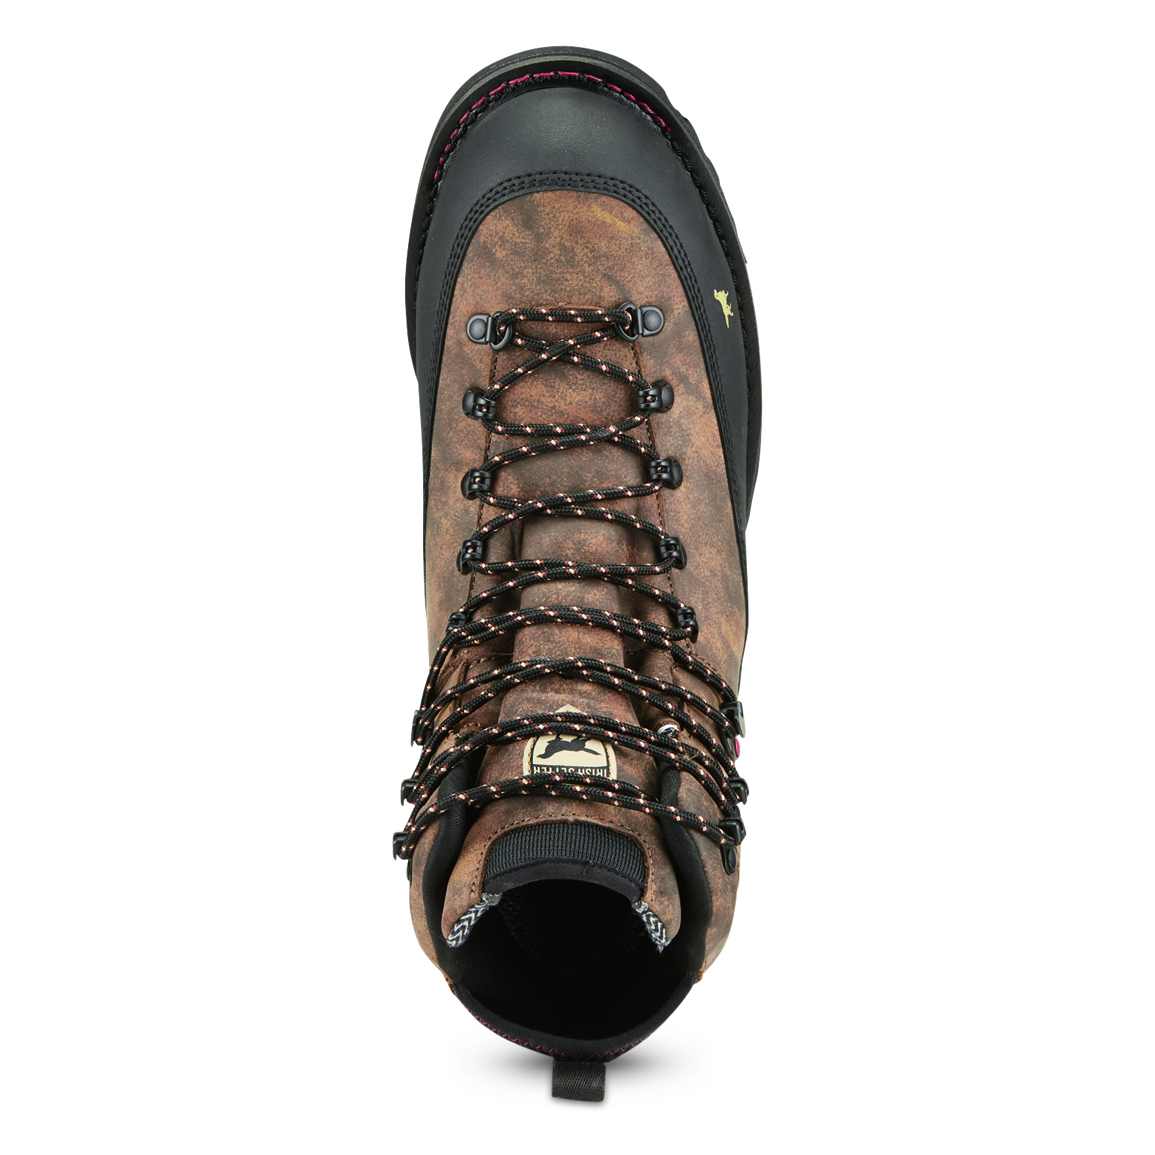 Irish Setter Elk Tracker XD 8" Waterproof Insulated Hunting Boots, 200 Gram, Field Camo